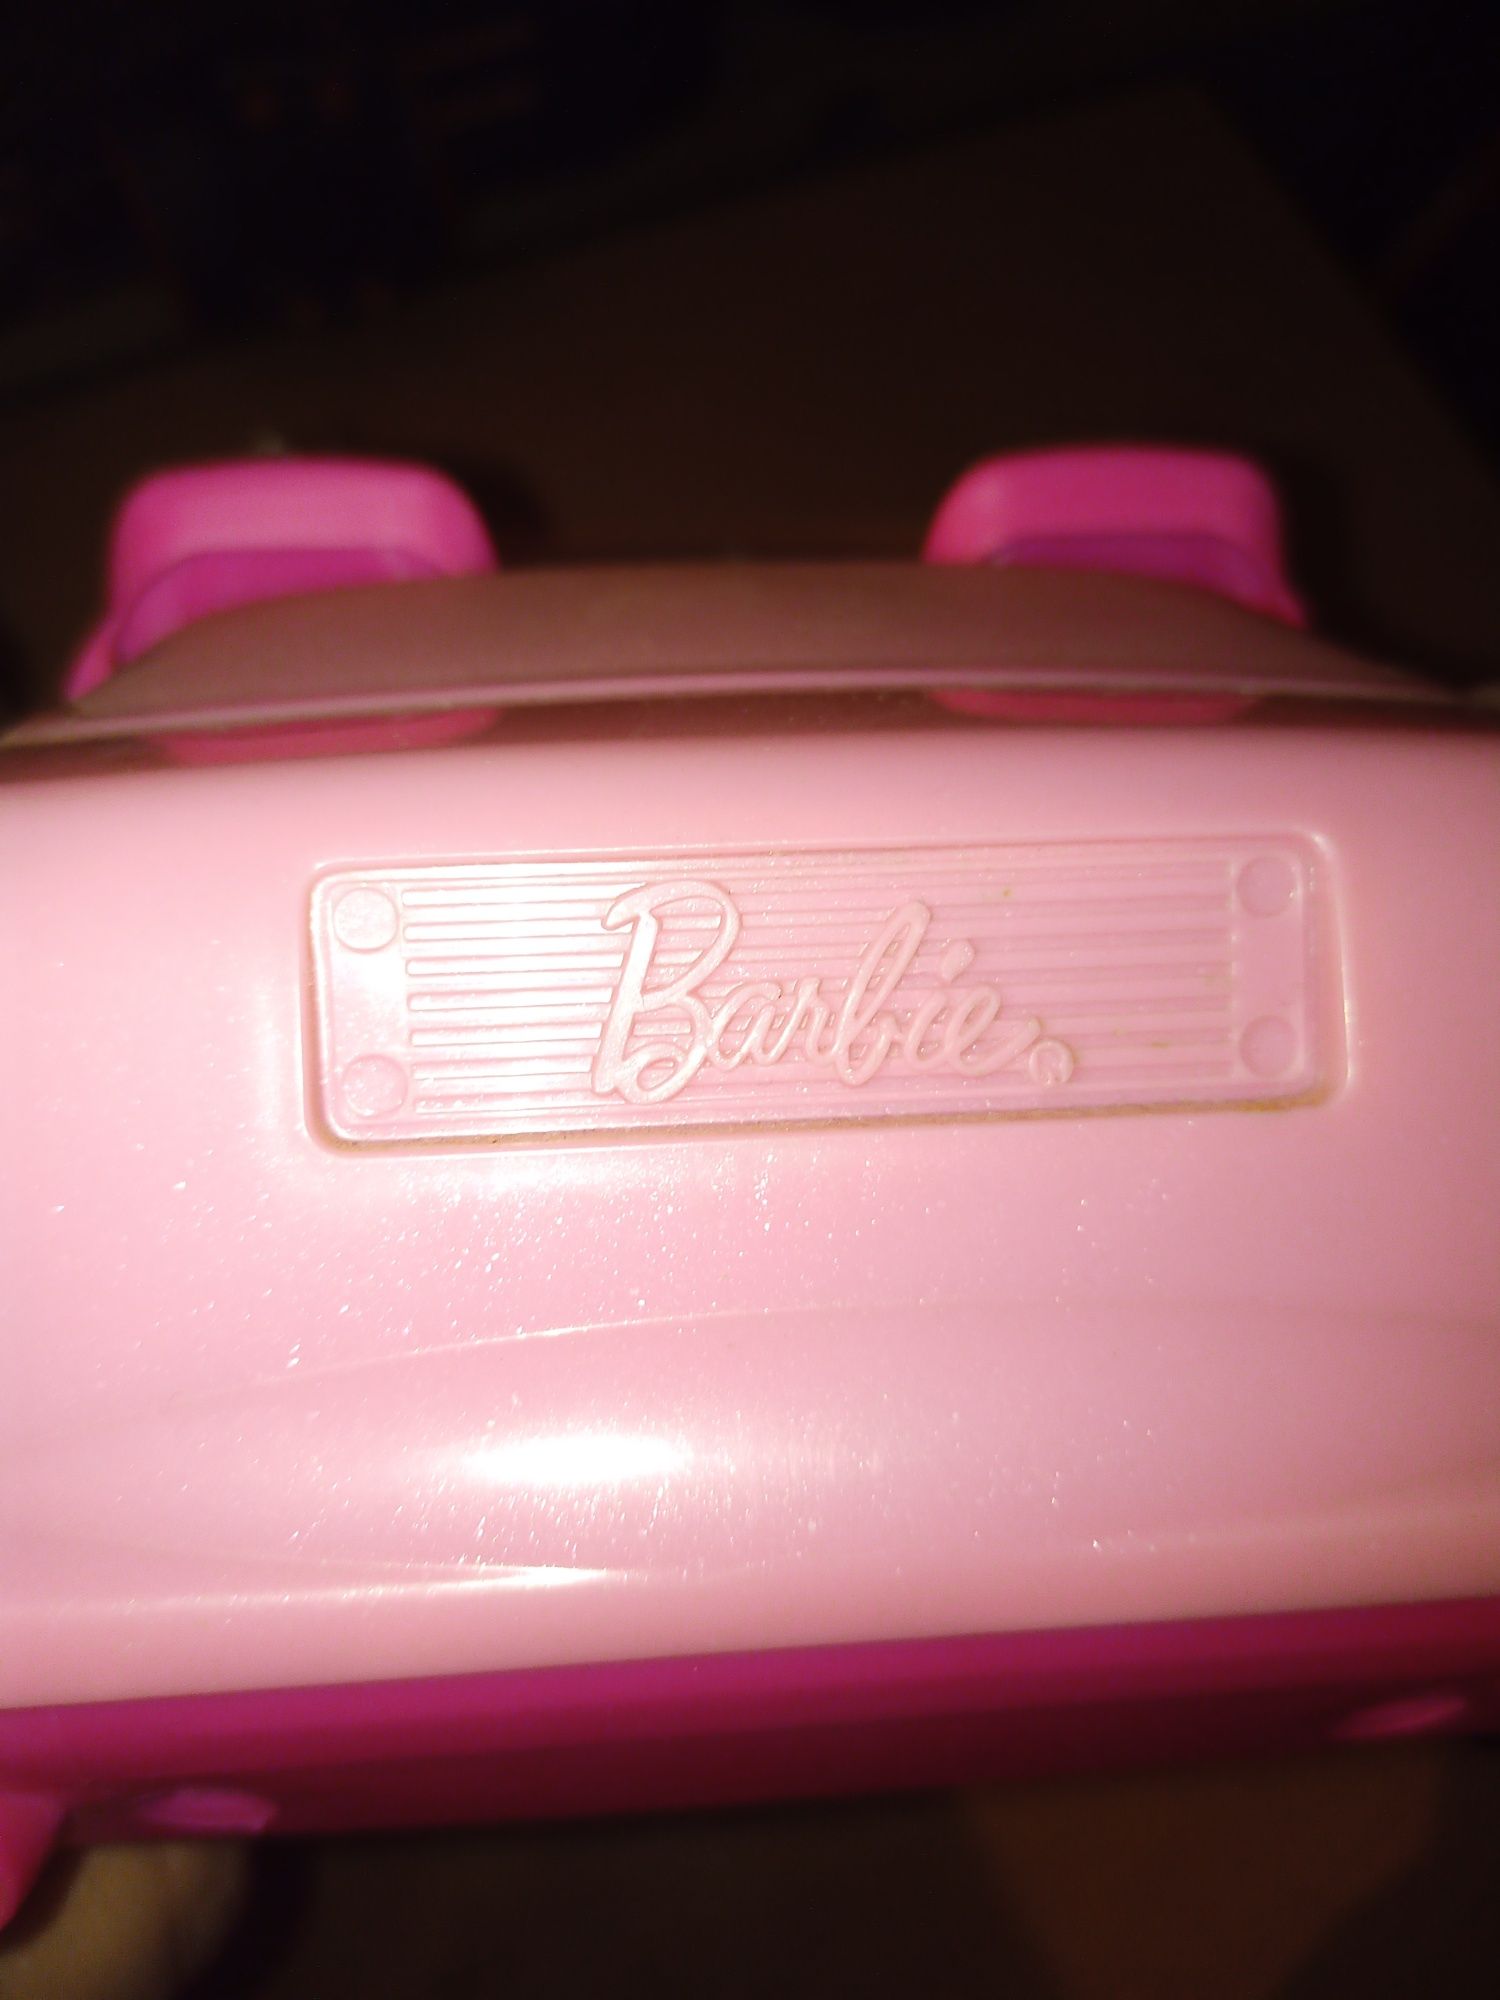 Vând mașina Barbie și mașina Monster High